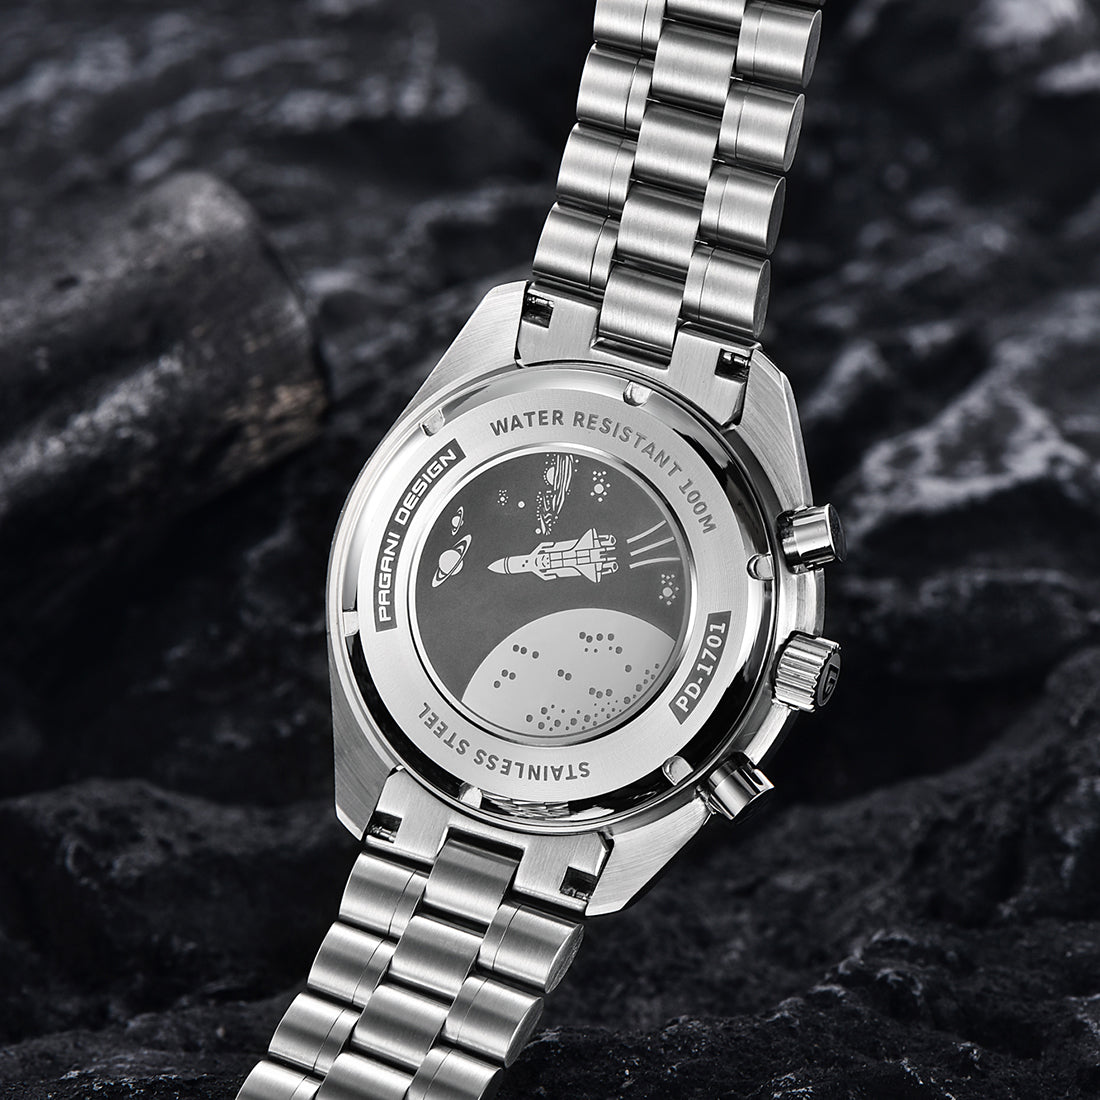 PAGANI DESIGN PD1701 Men's Quartz Watches 40mm Stainless Steel Waterproof Sports Chronometer Wrist Watch Sapphire Dial Glass